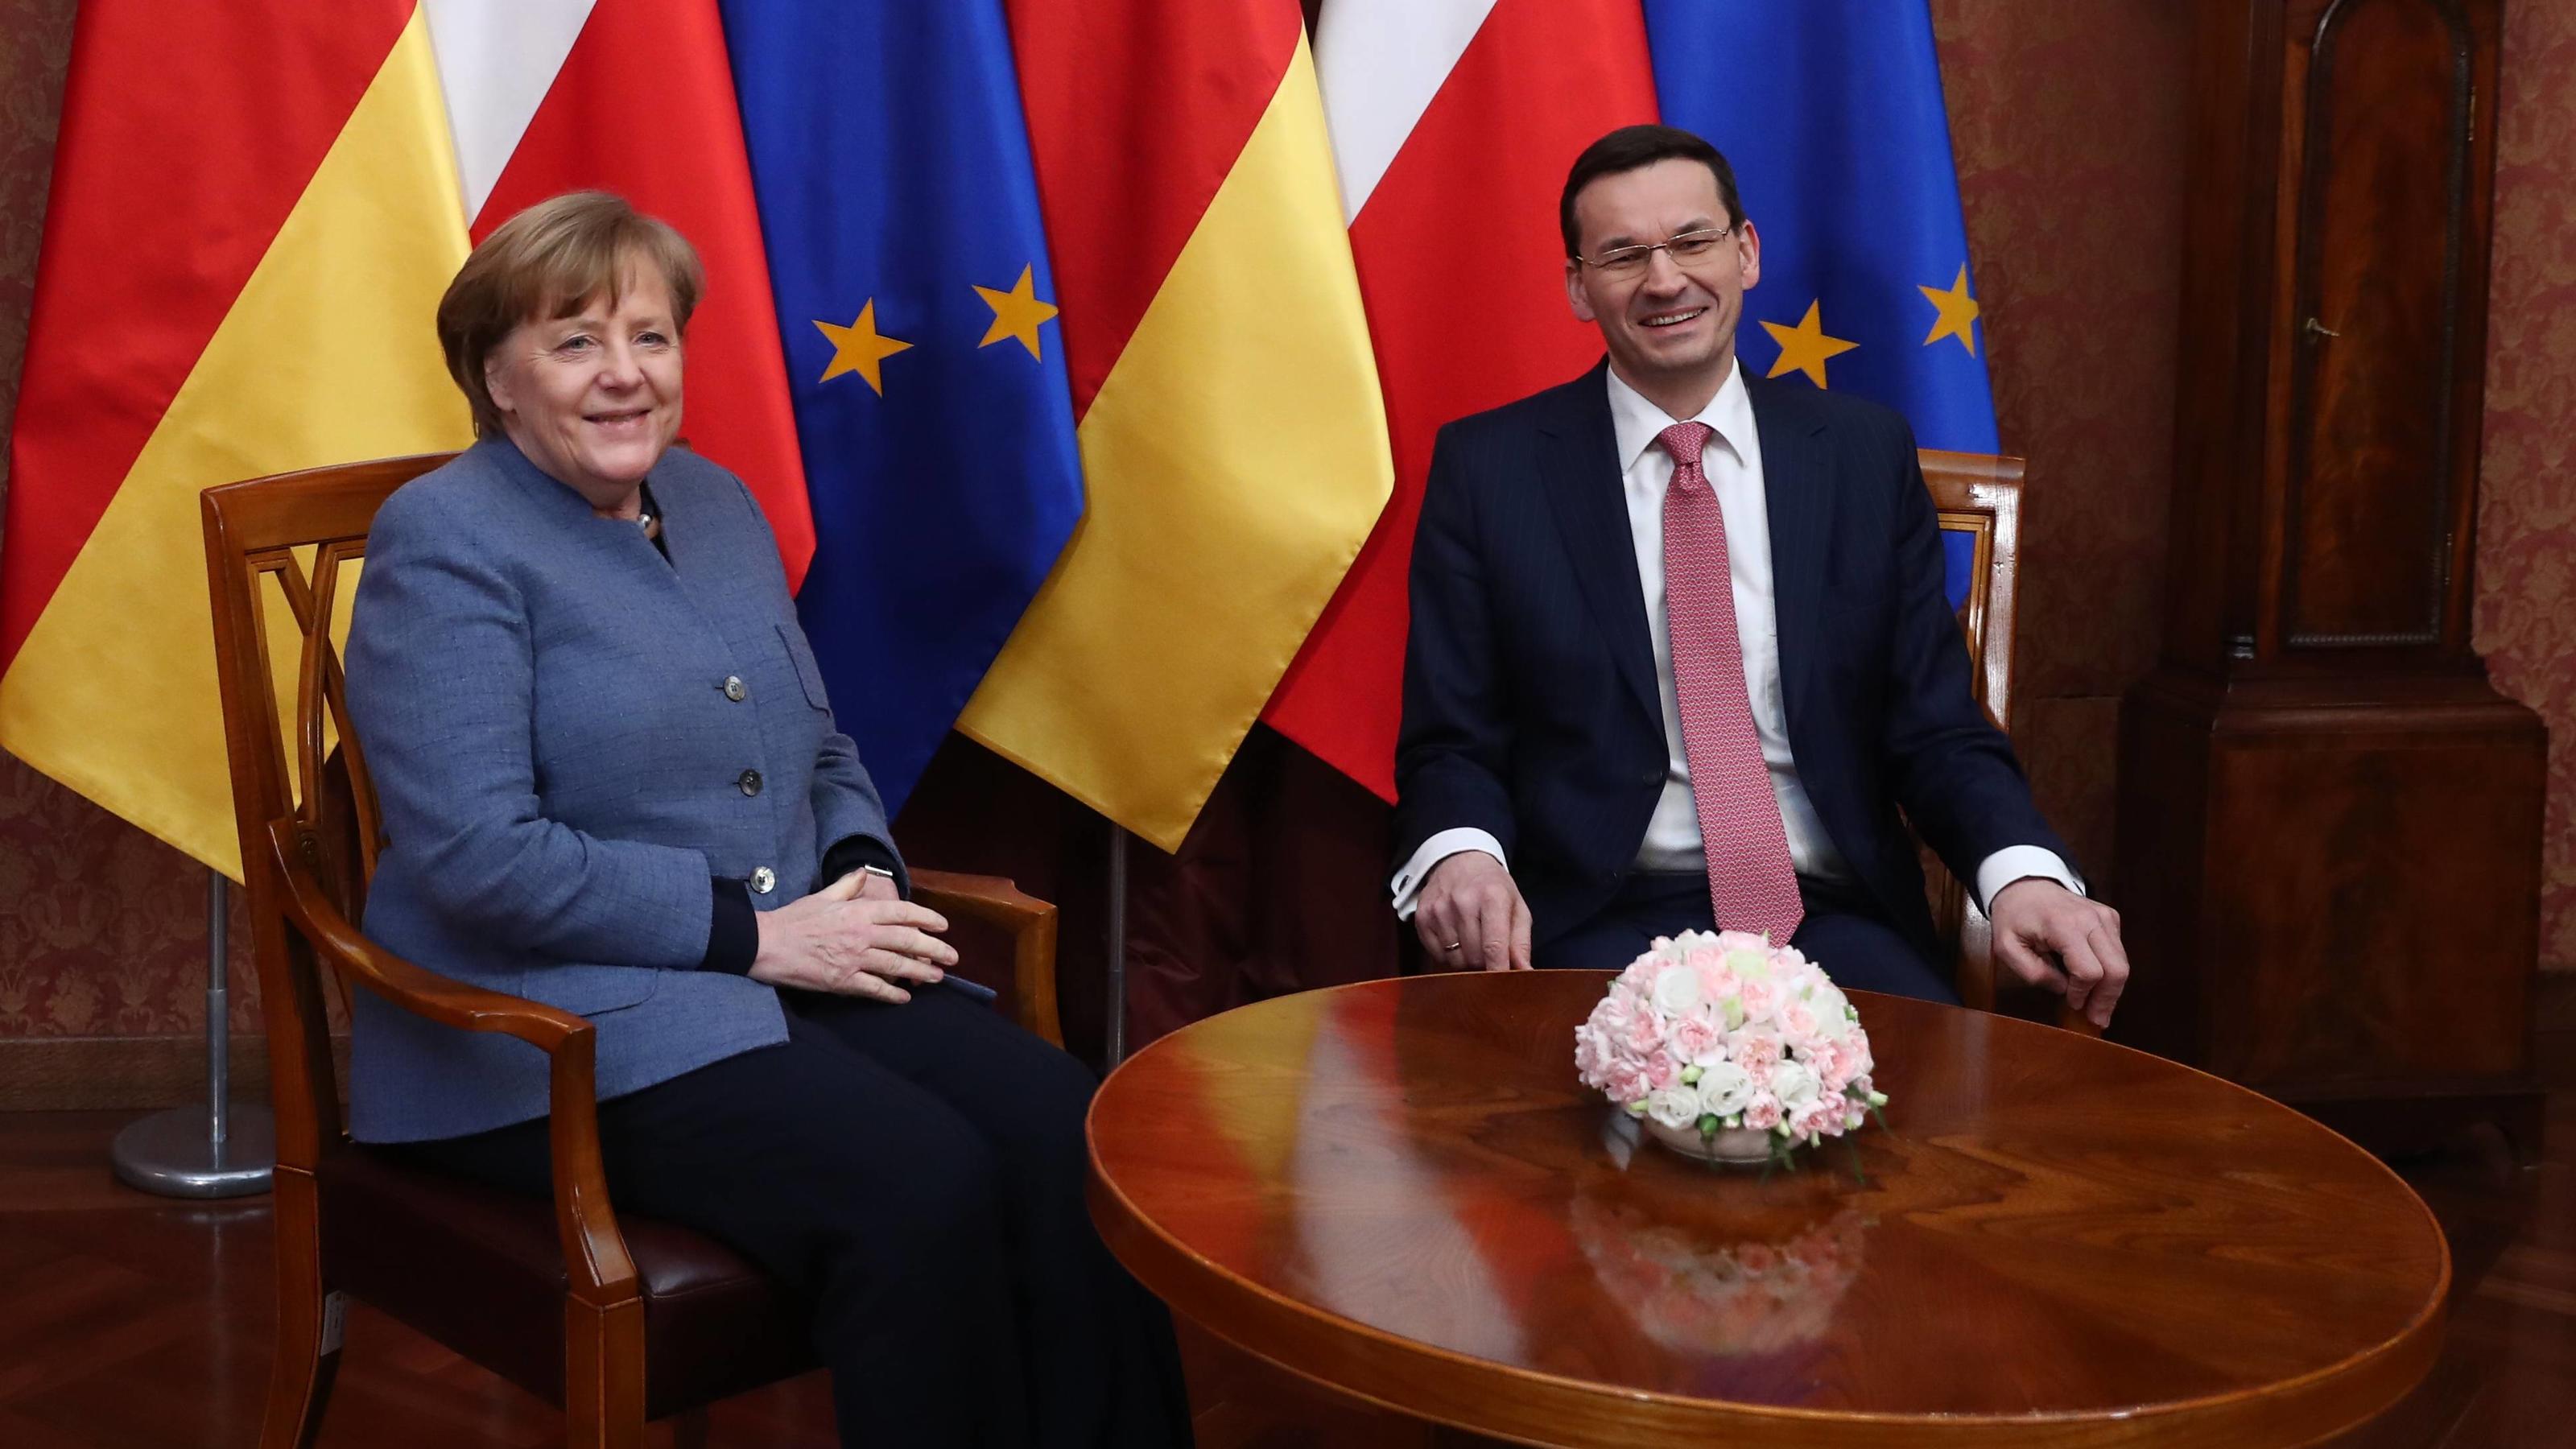 Angela Merkel in Poland German Chancellor Angela Merkel is received by Poland s Prime Minister Mateusz Morawiecki on March 19, 2018 during her visit to Warsaw, Poland. EN_01310563_0049 PUBLICATIONxINxGERxSUIxAUTxONLY  